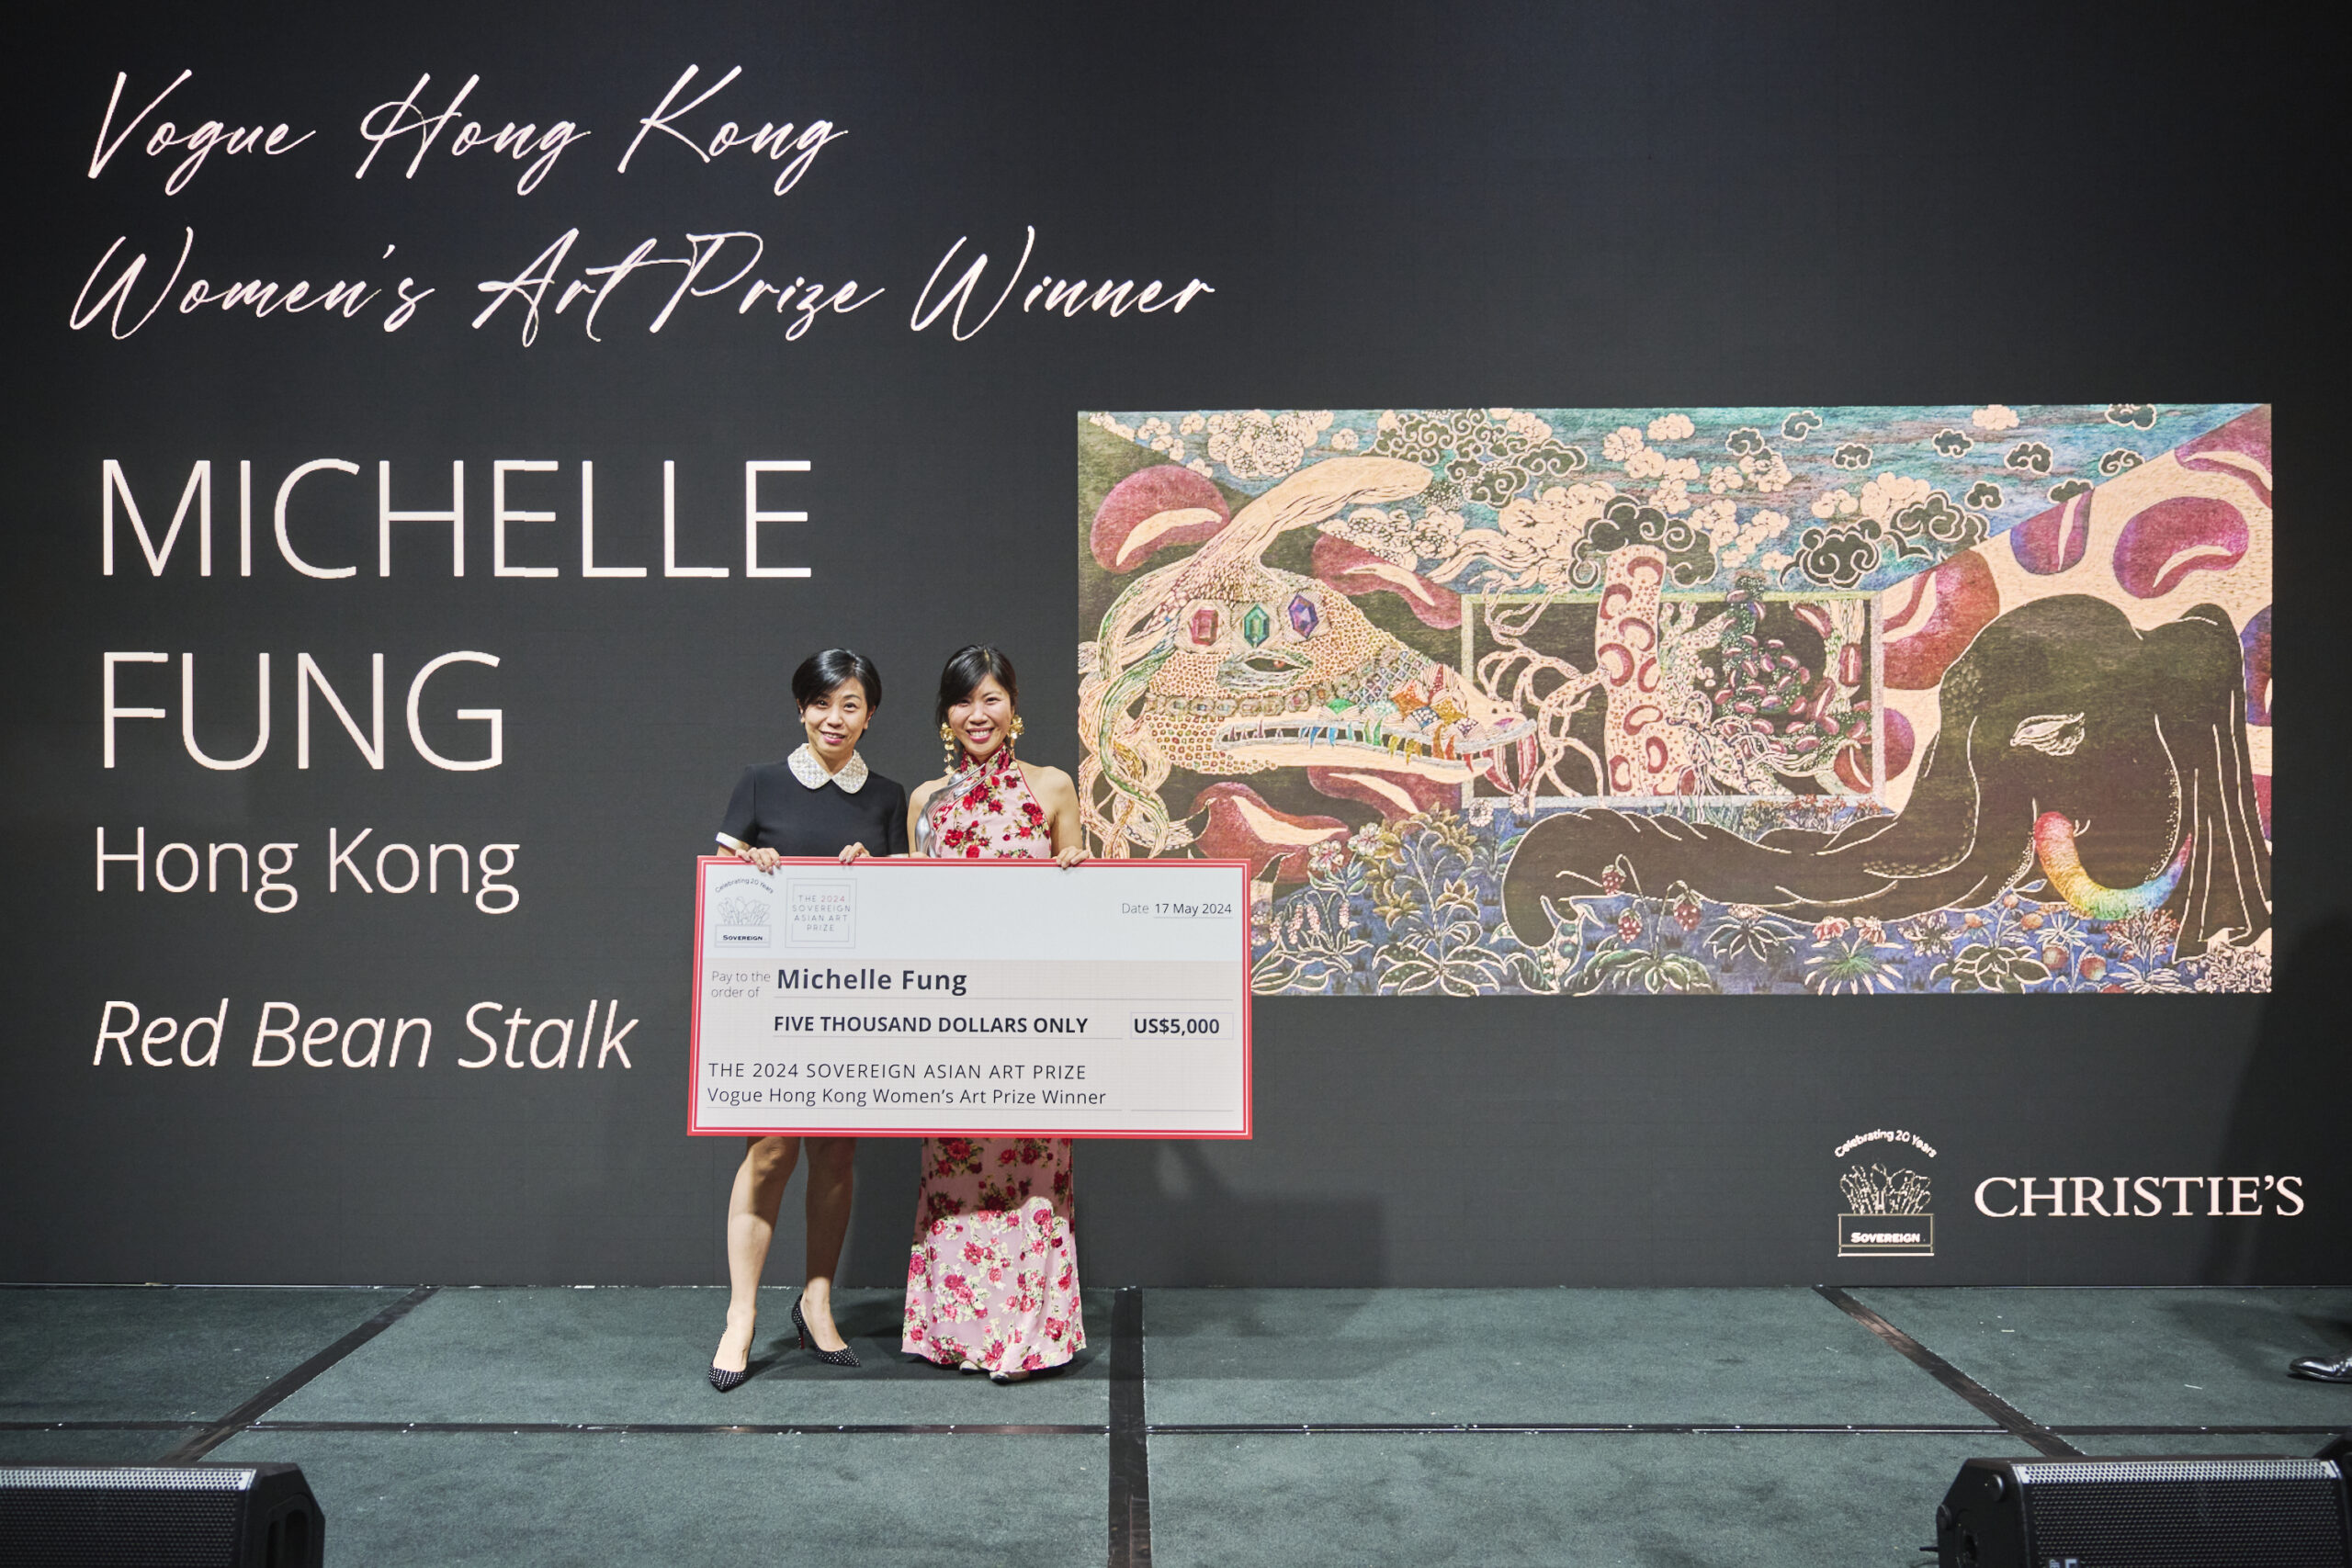 The Vogue Hong Kong Women’s Art Prize Winner of The 2024 Sovereign Asian Art Prize image